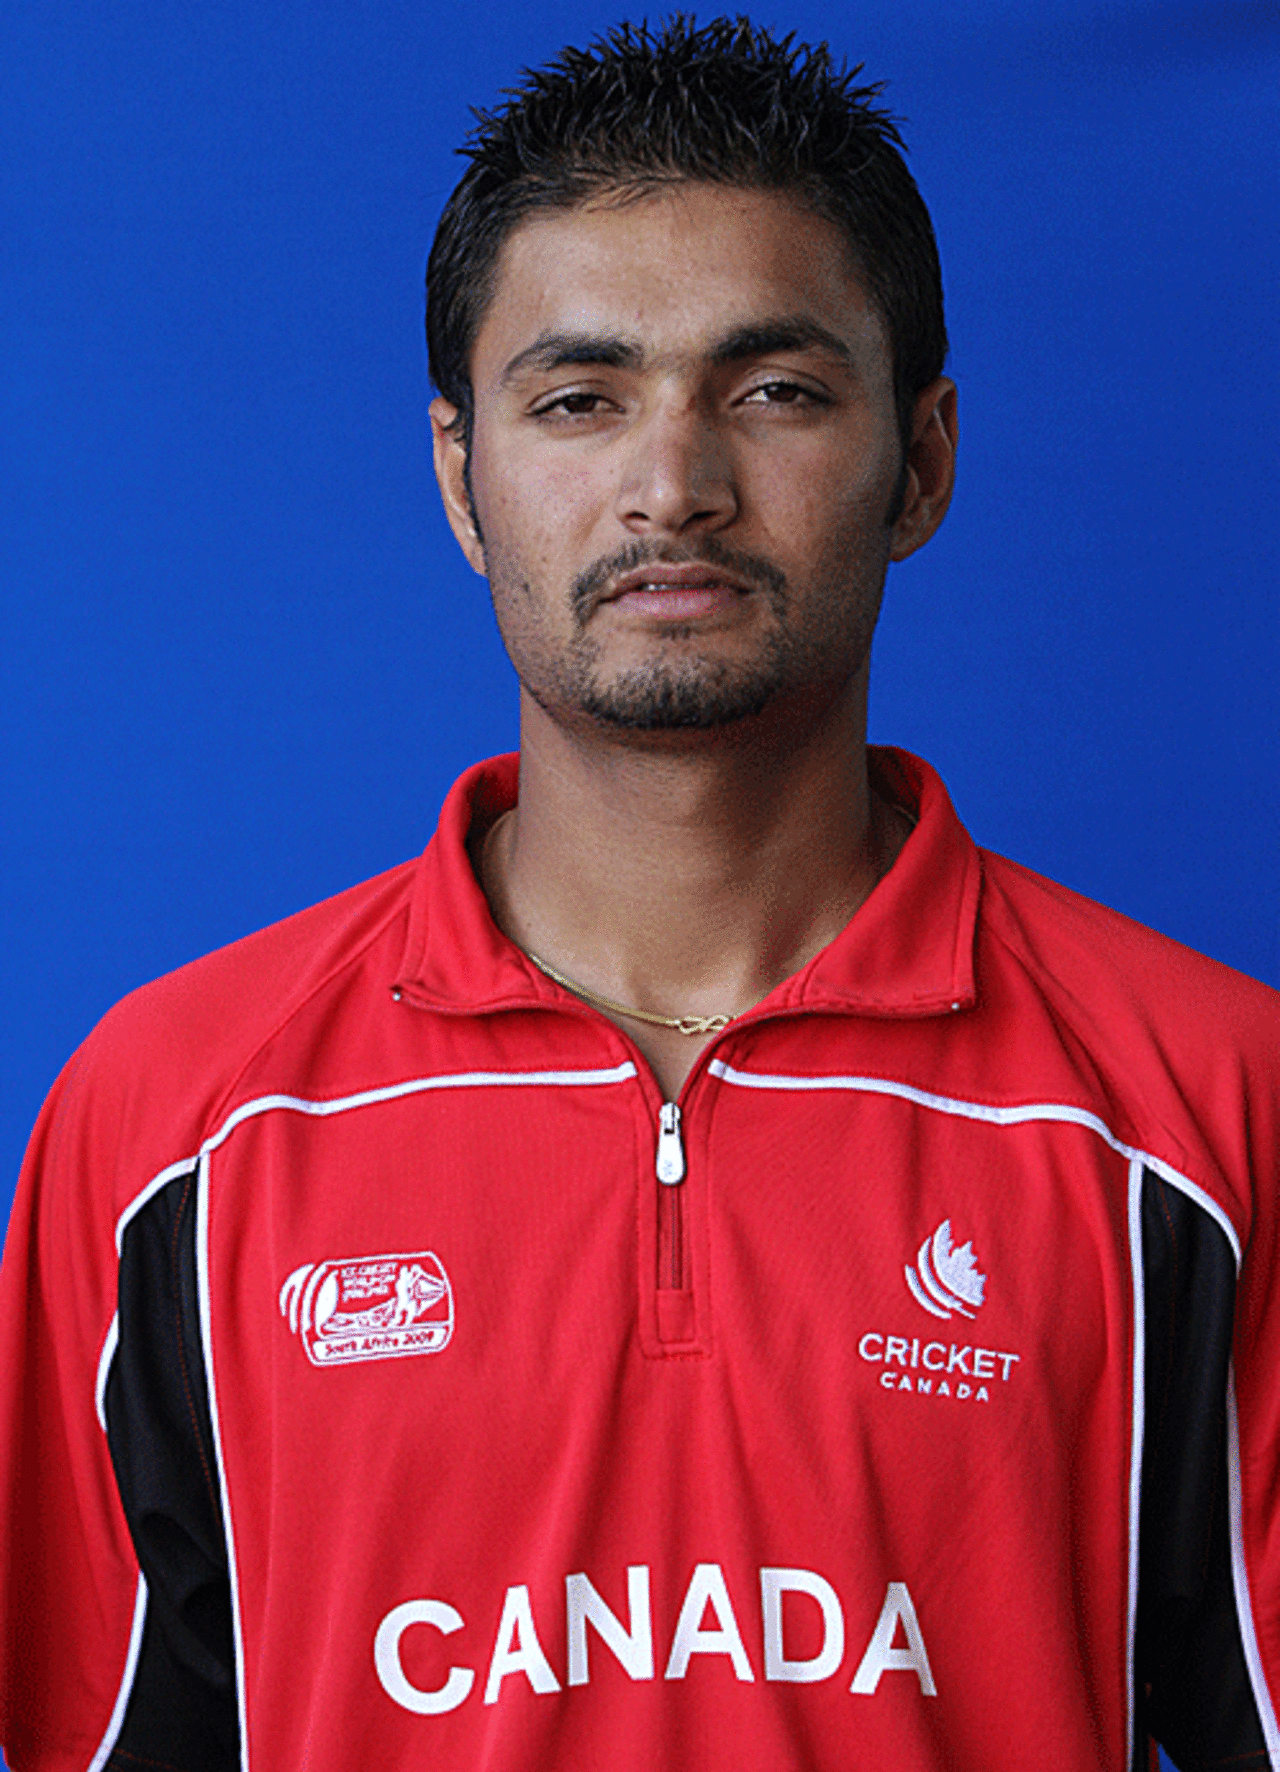 Harvir Baidwan, player portrait, April 3, 2009